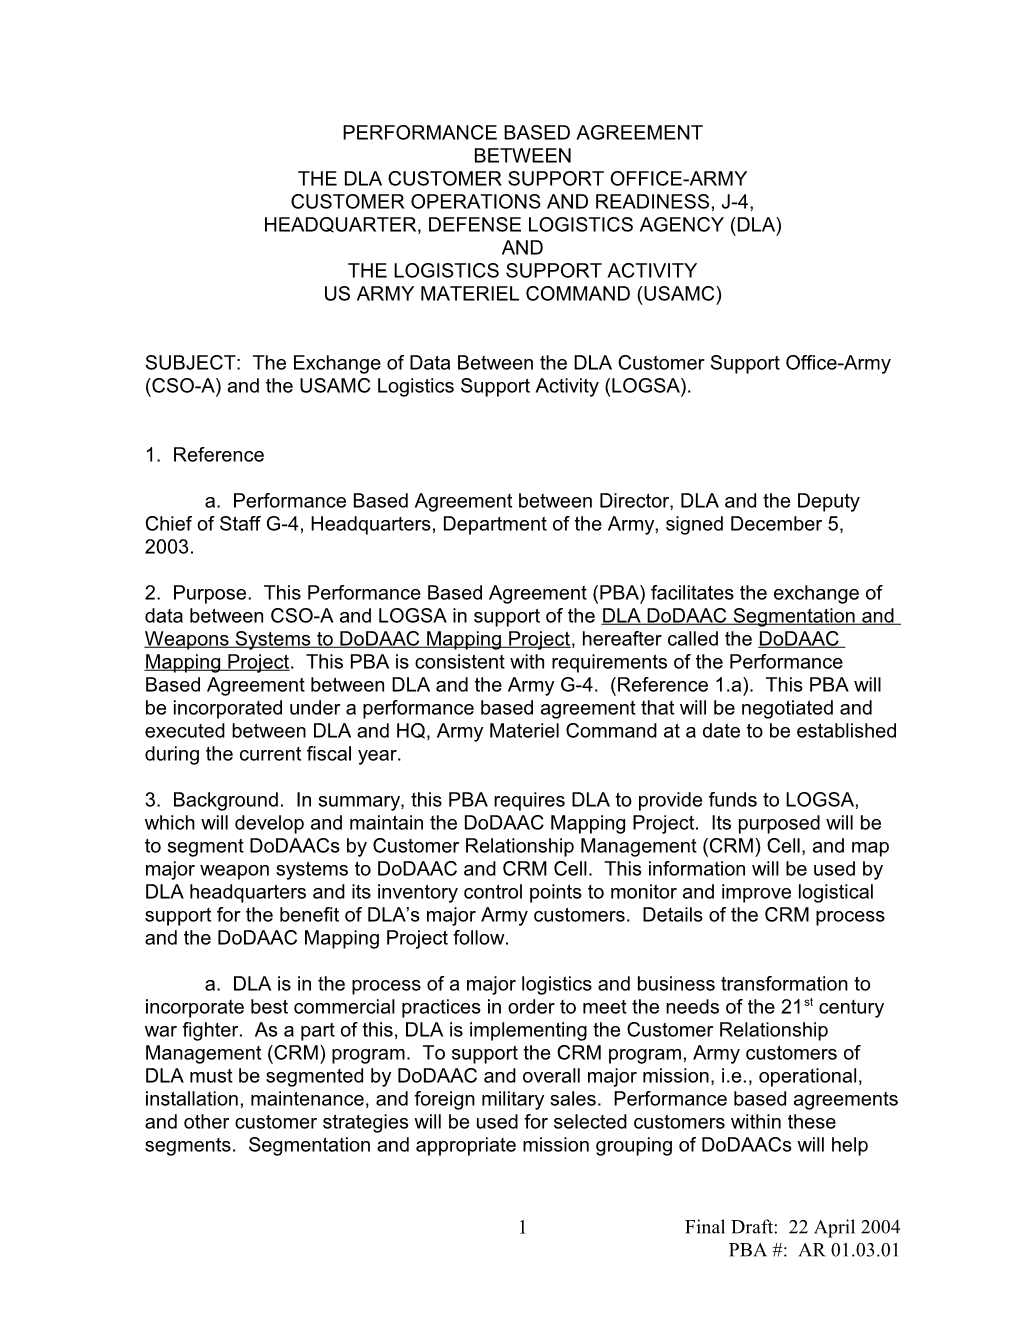 Defense Logistics Agency DLA - Army Materiel Command LOGSA Performance Based Agreement